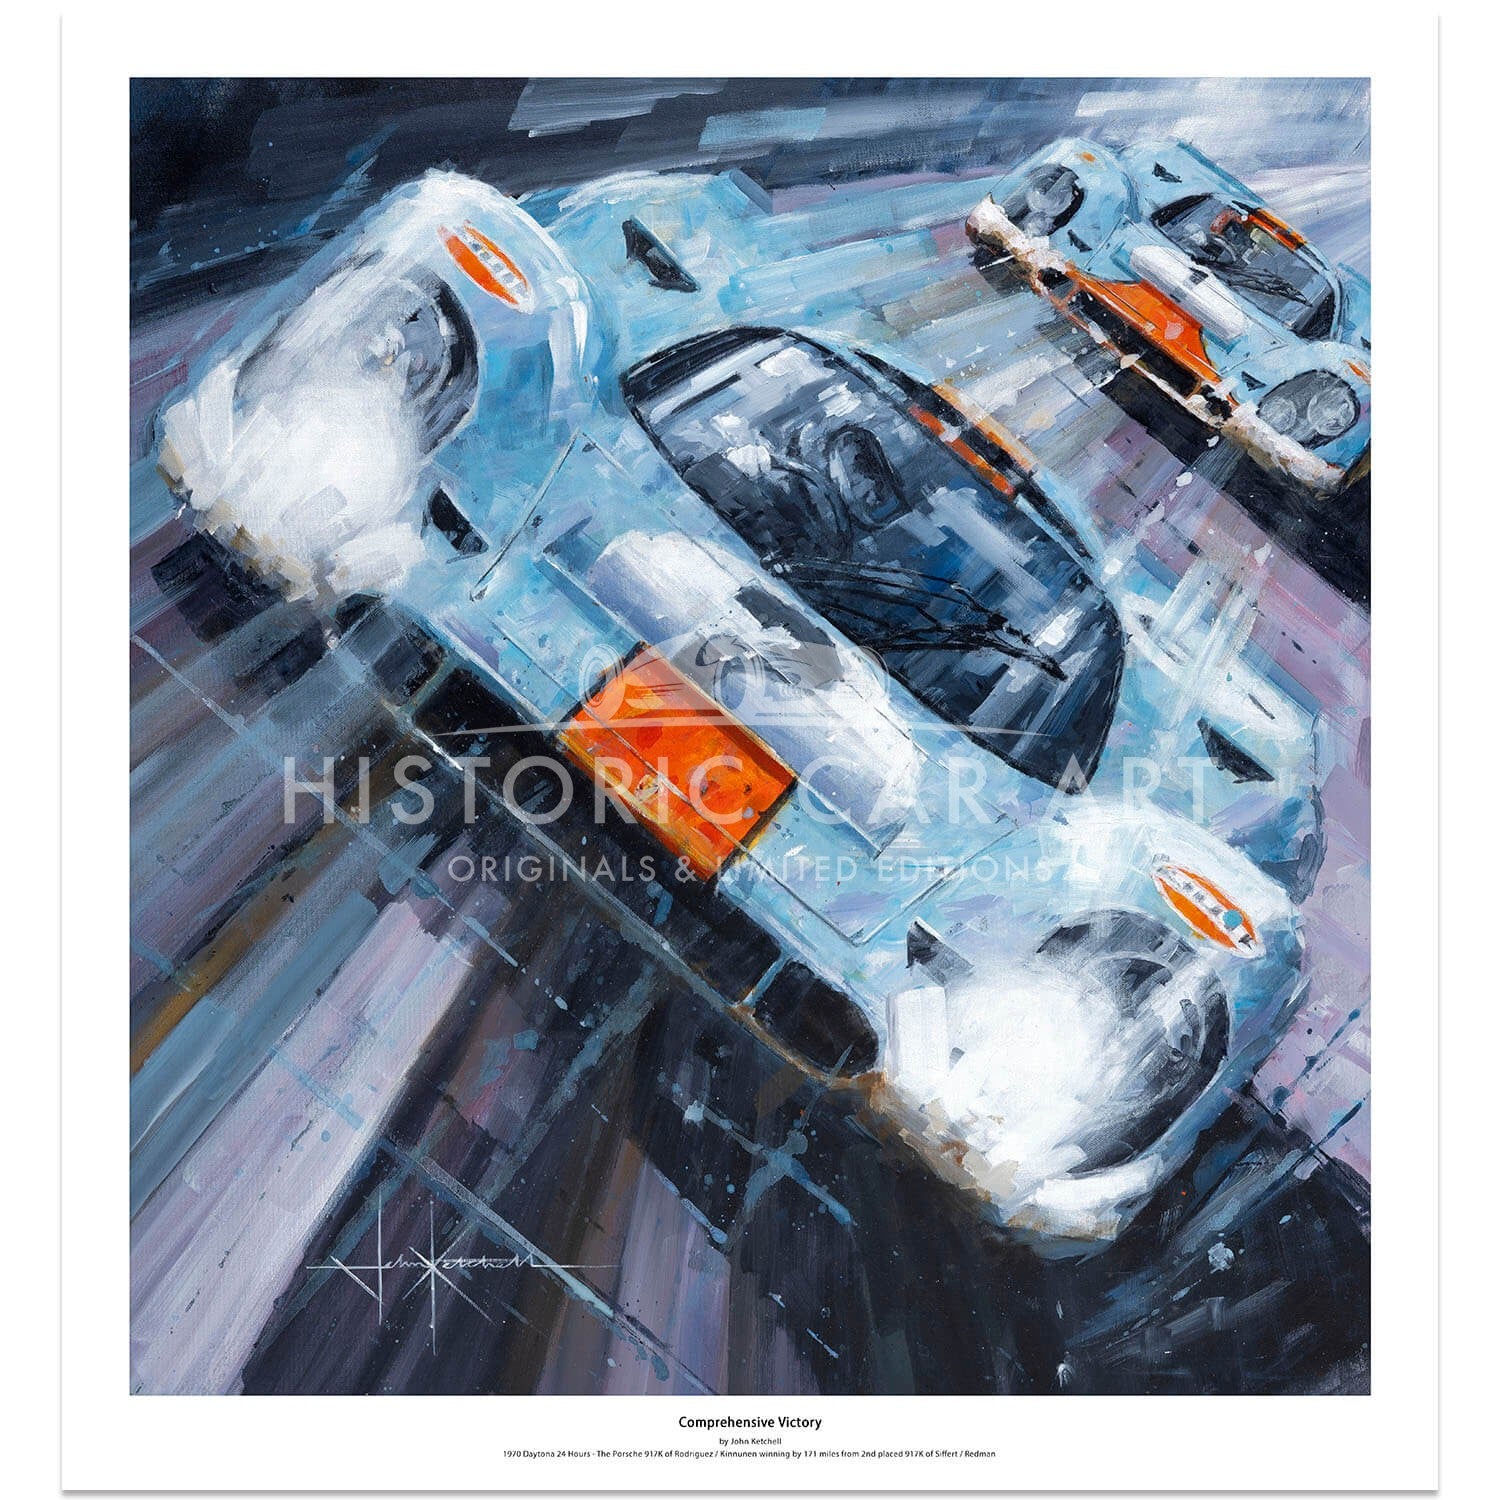 Comprehensive Victory | Daytona 24 Hours 1970 | Porsche 917K | Art Print